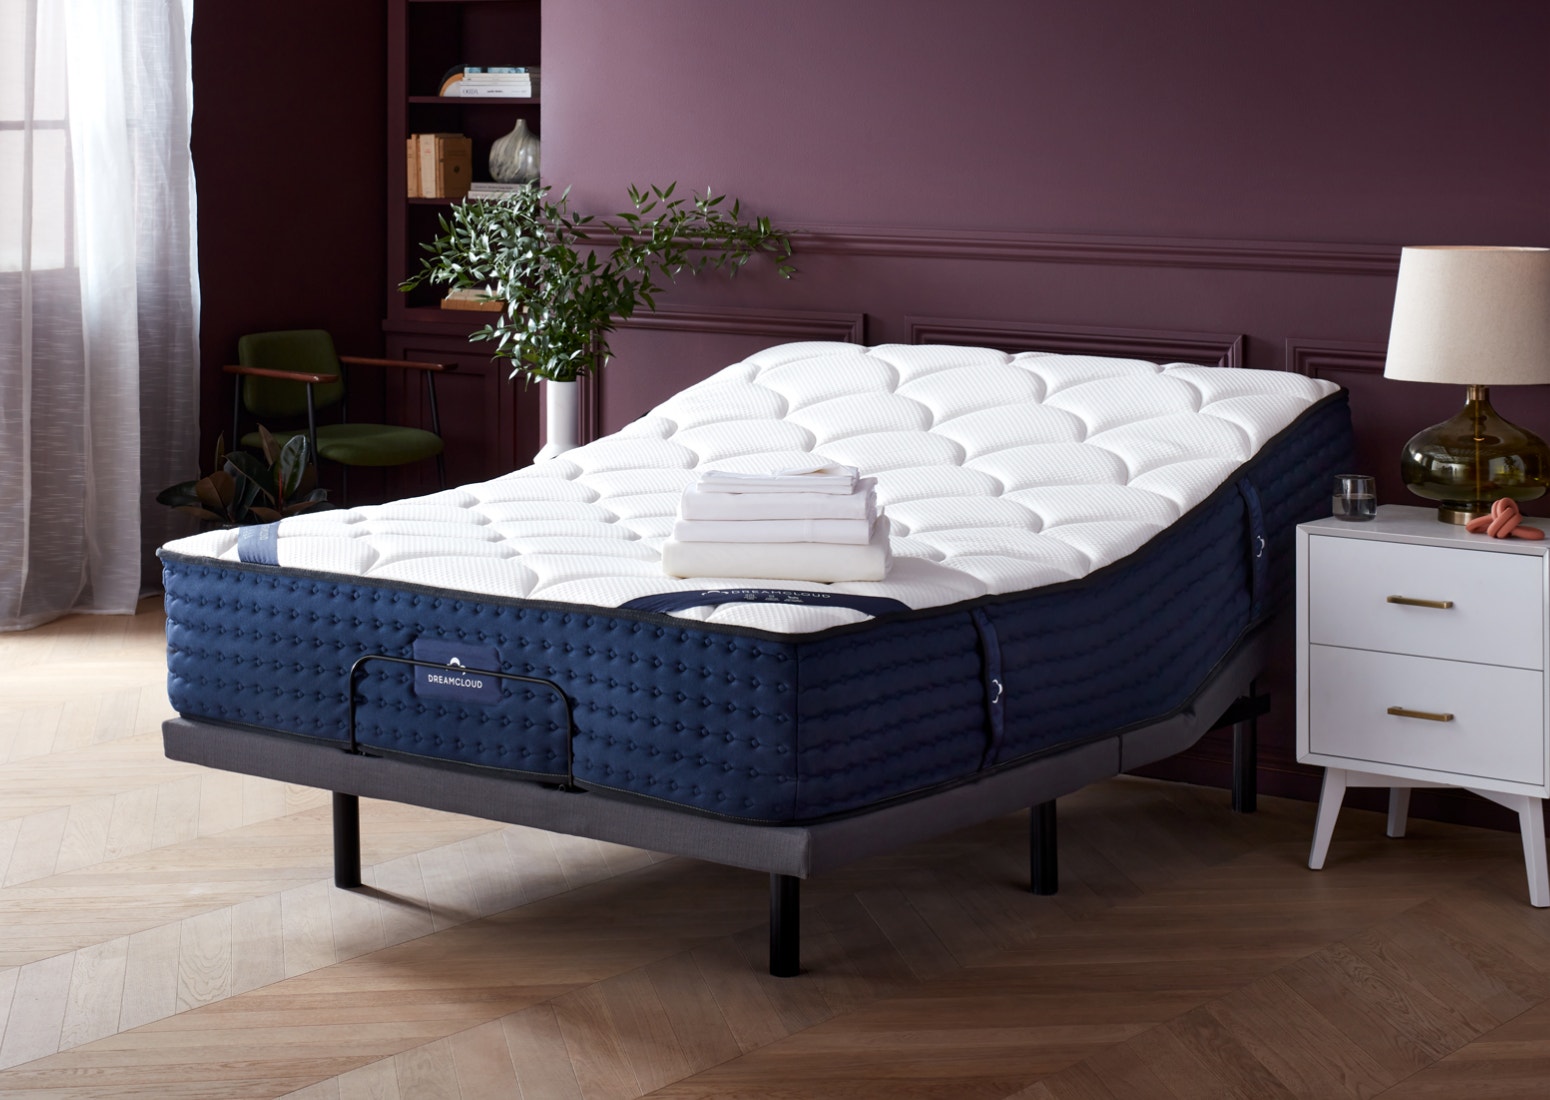 Adjustable Bed Frames Best Luxury, Adjustable Bed Frame And Mattress Queen Size